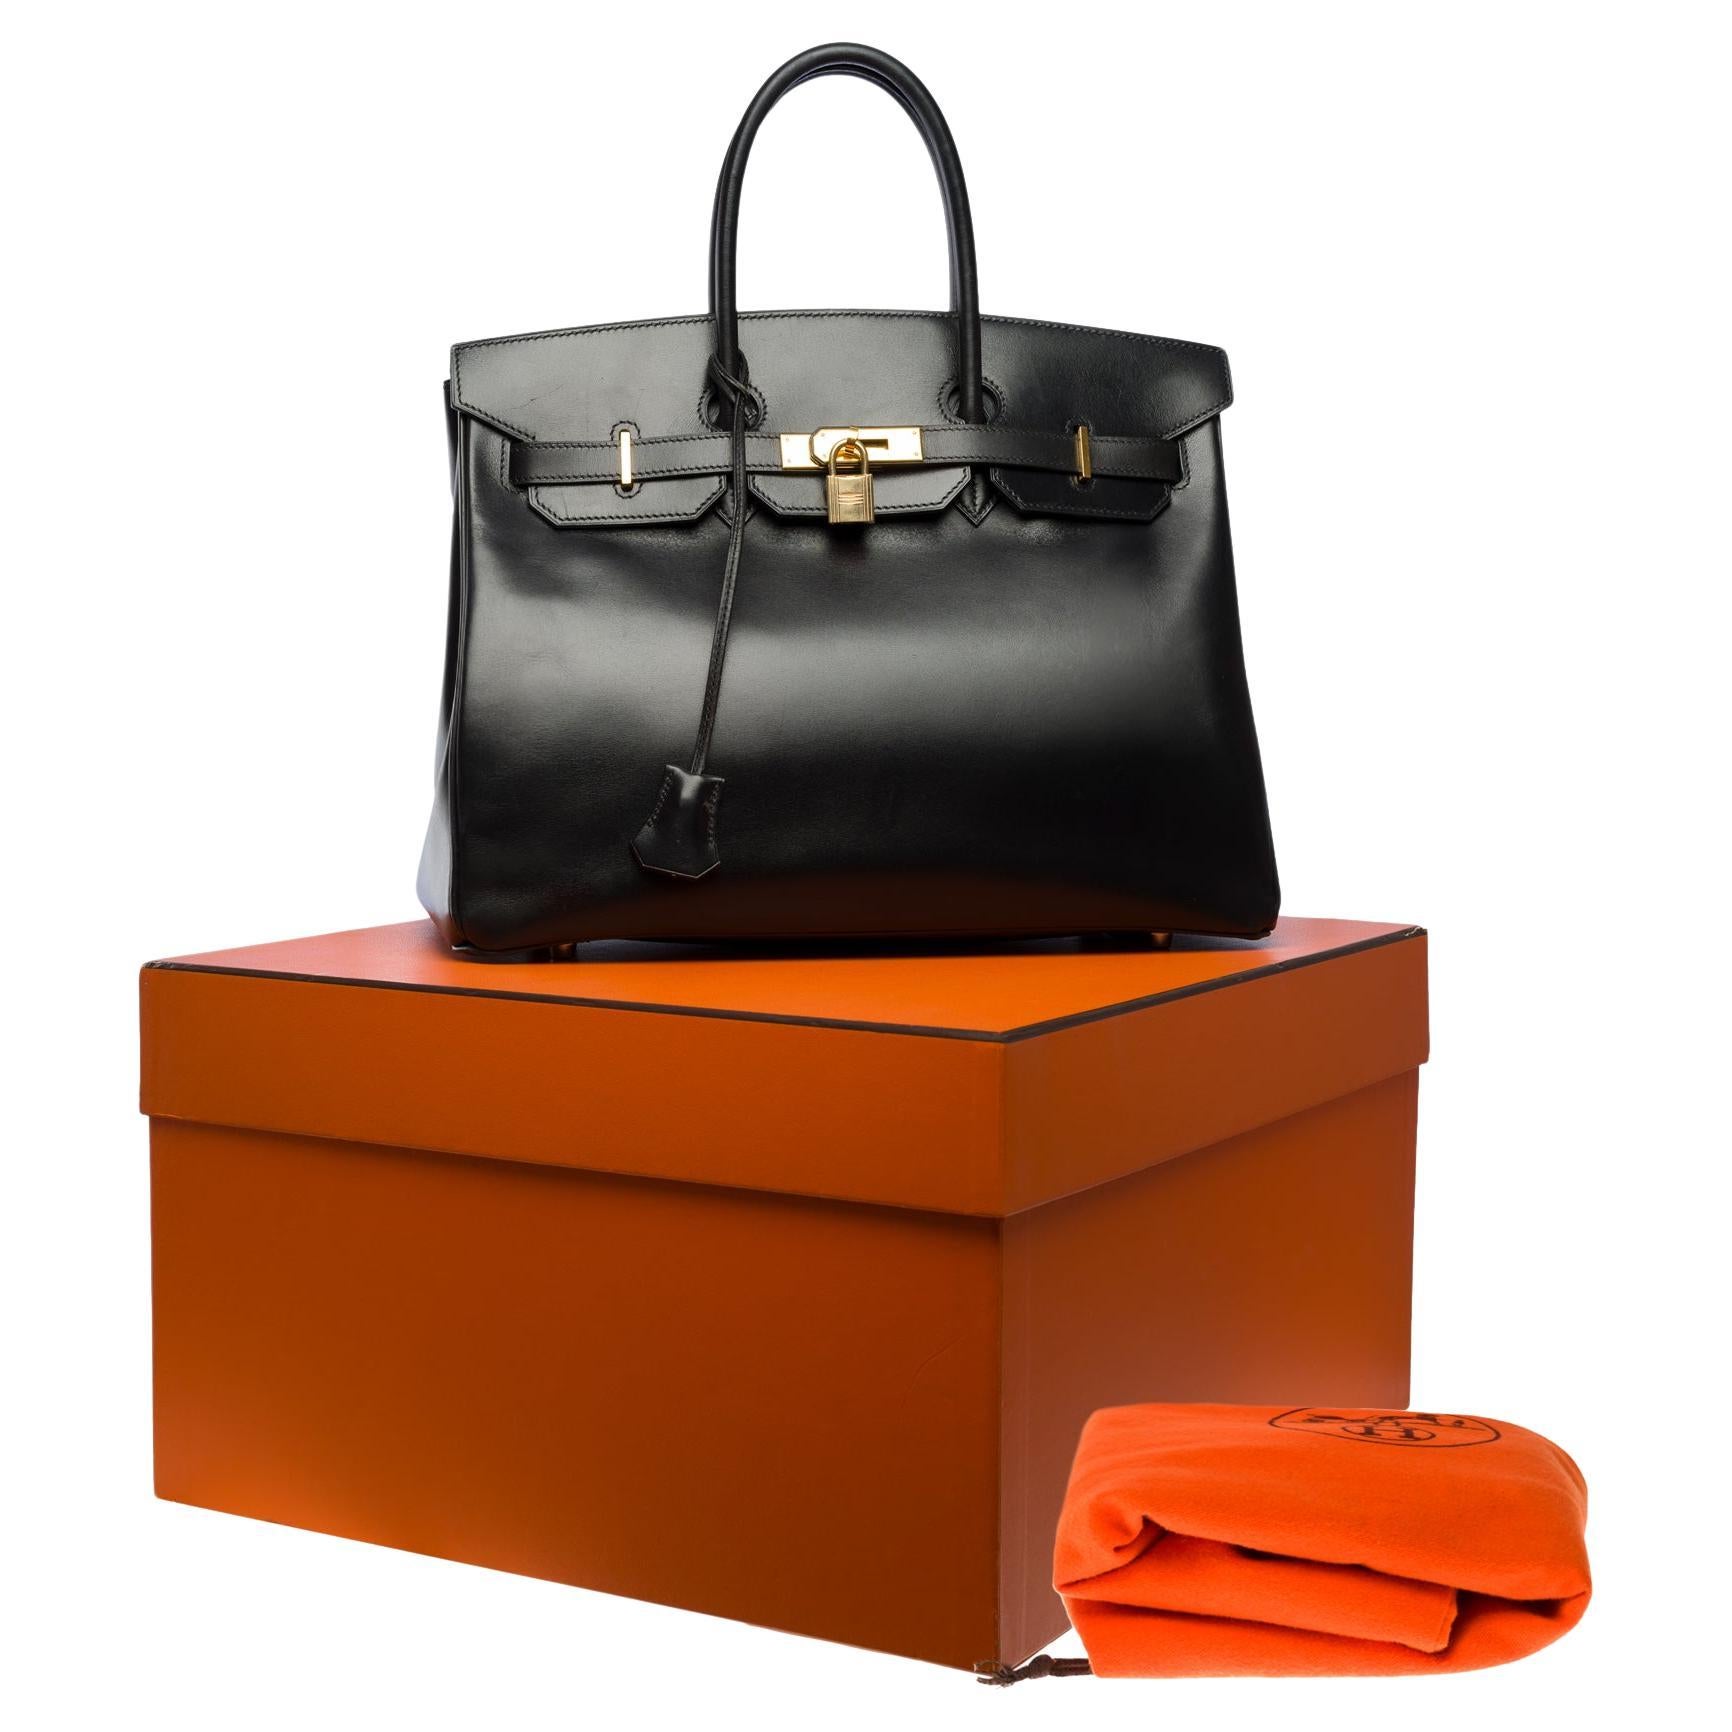 Amazing & Rare Hermès Birkin 35 handbag in black box calfskin leather, GHW